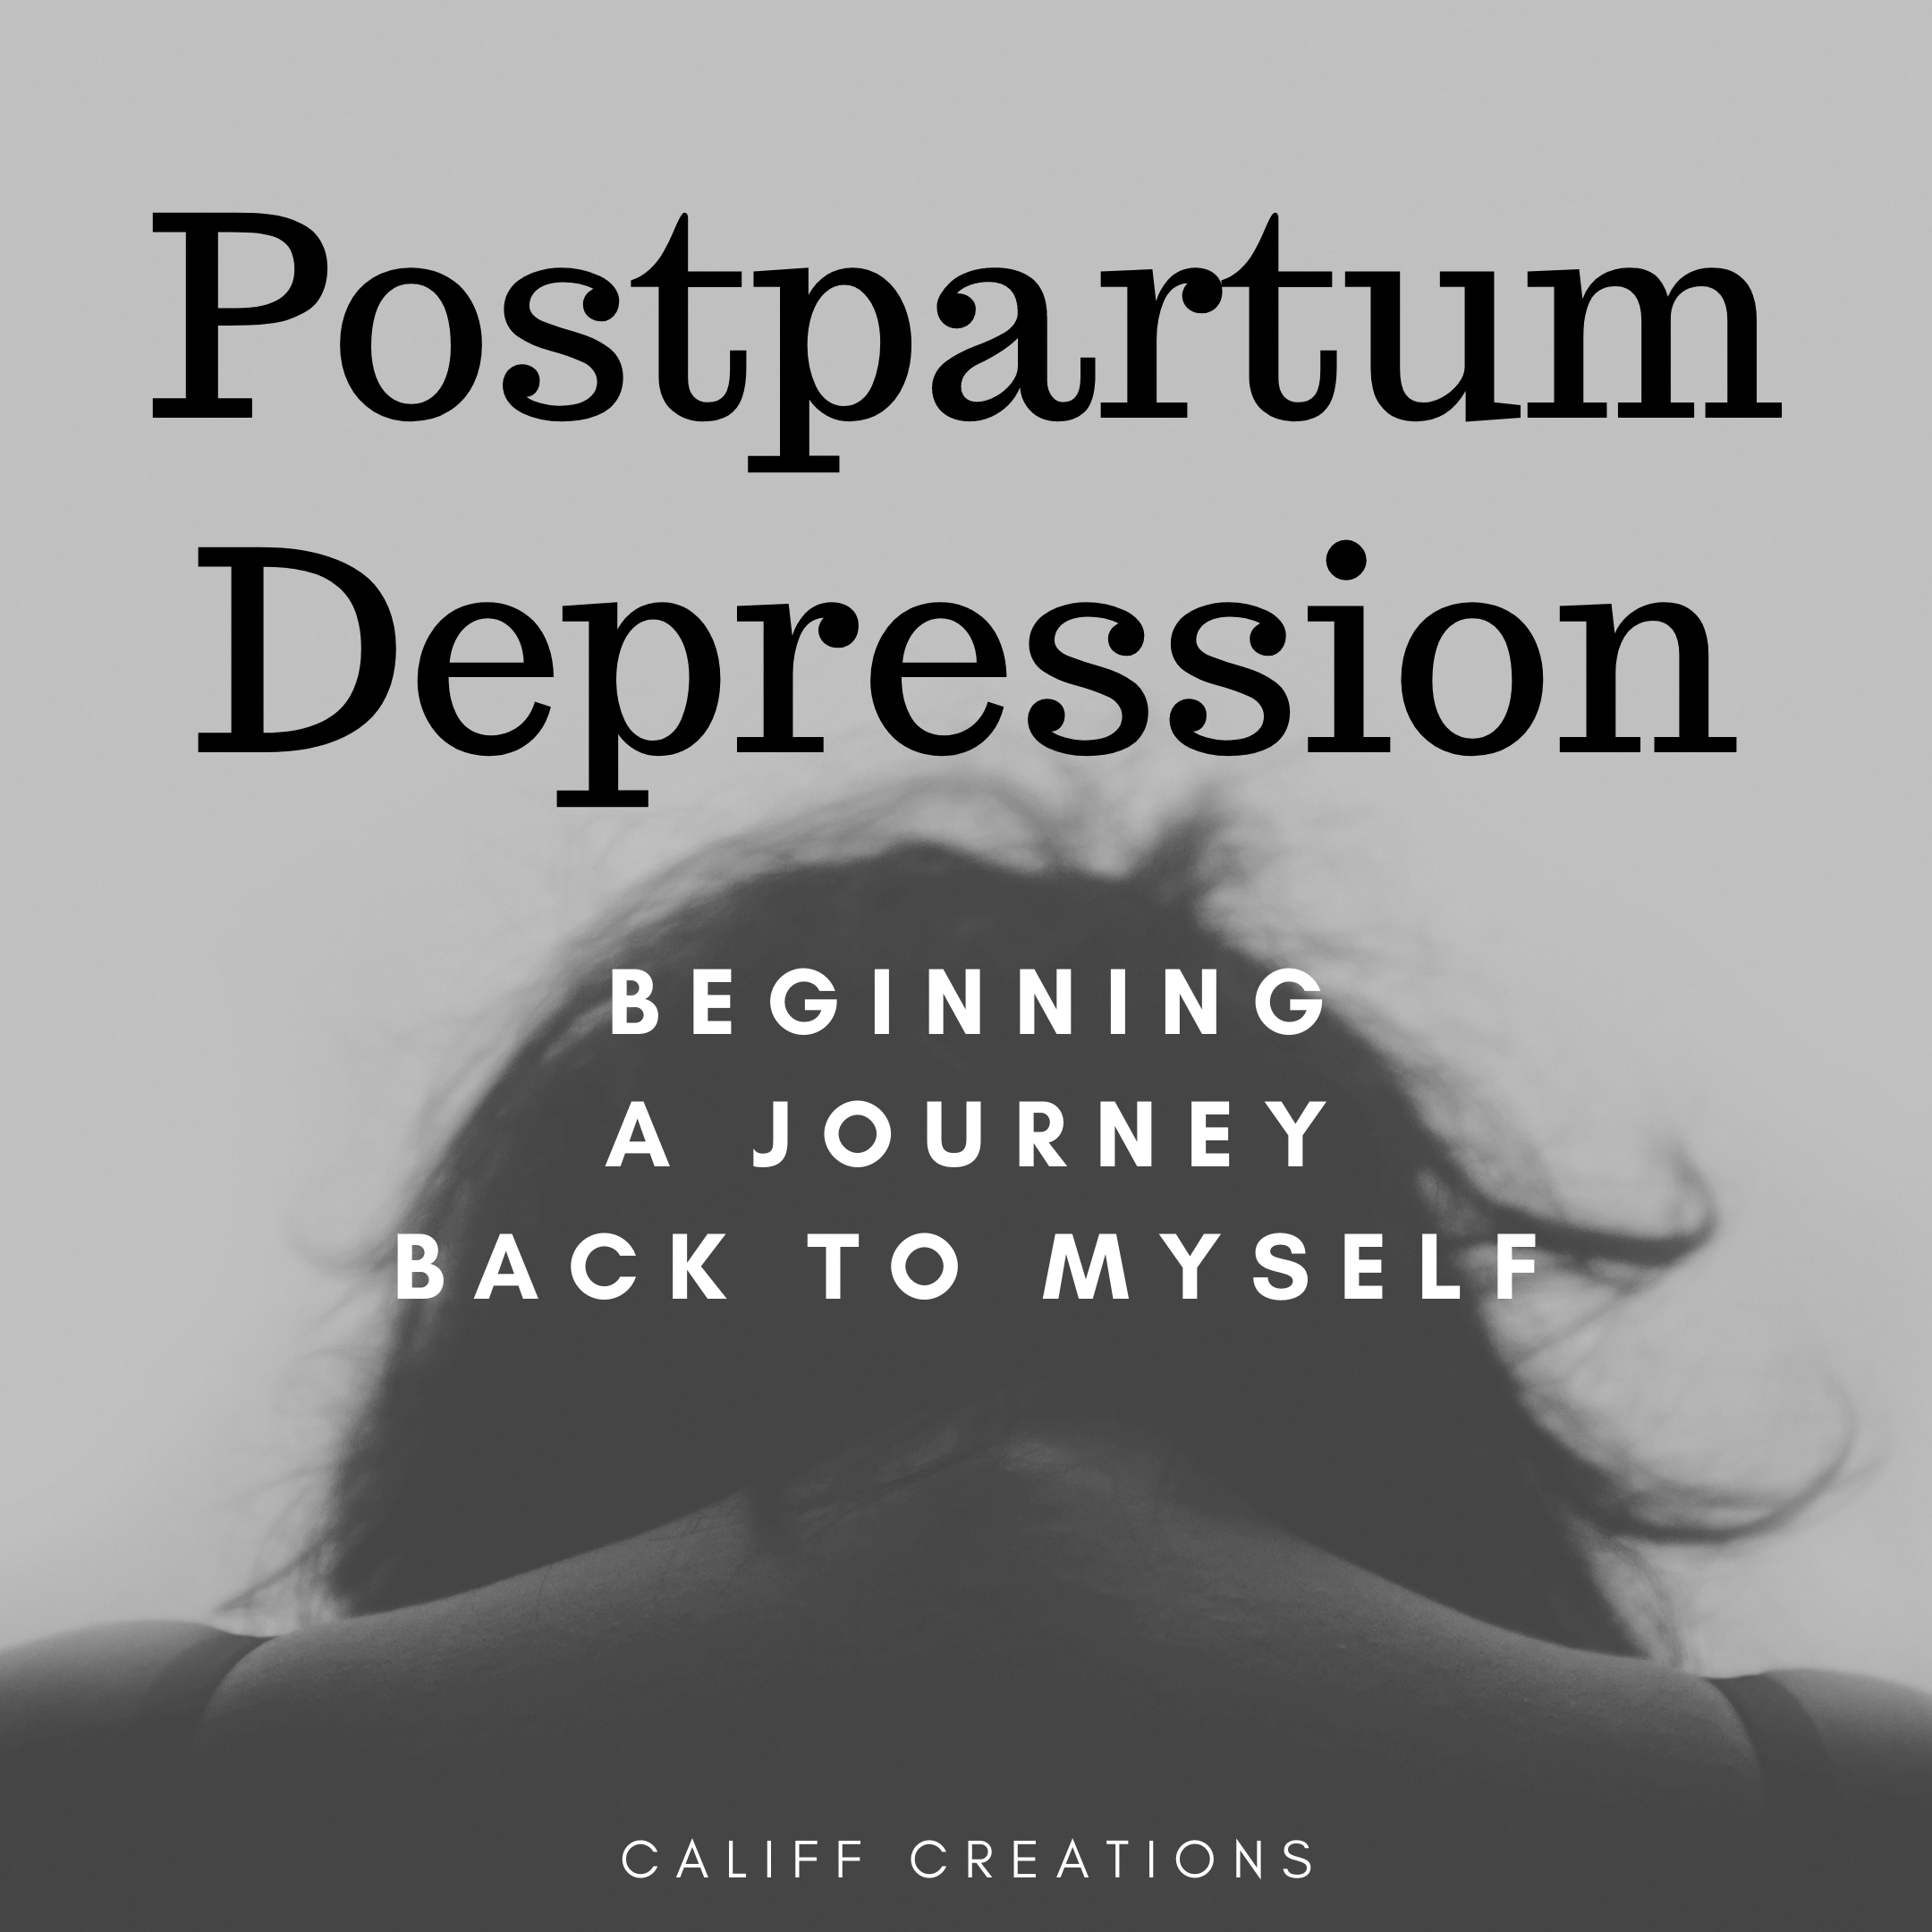 Postpartum Depression: Beginning a Journey Back to Myself